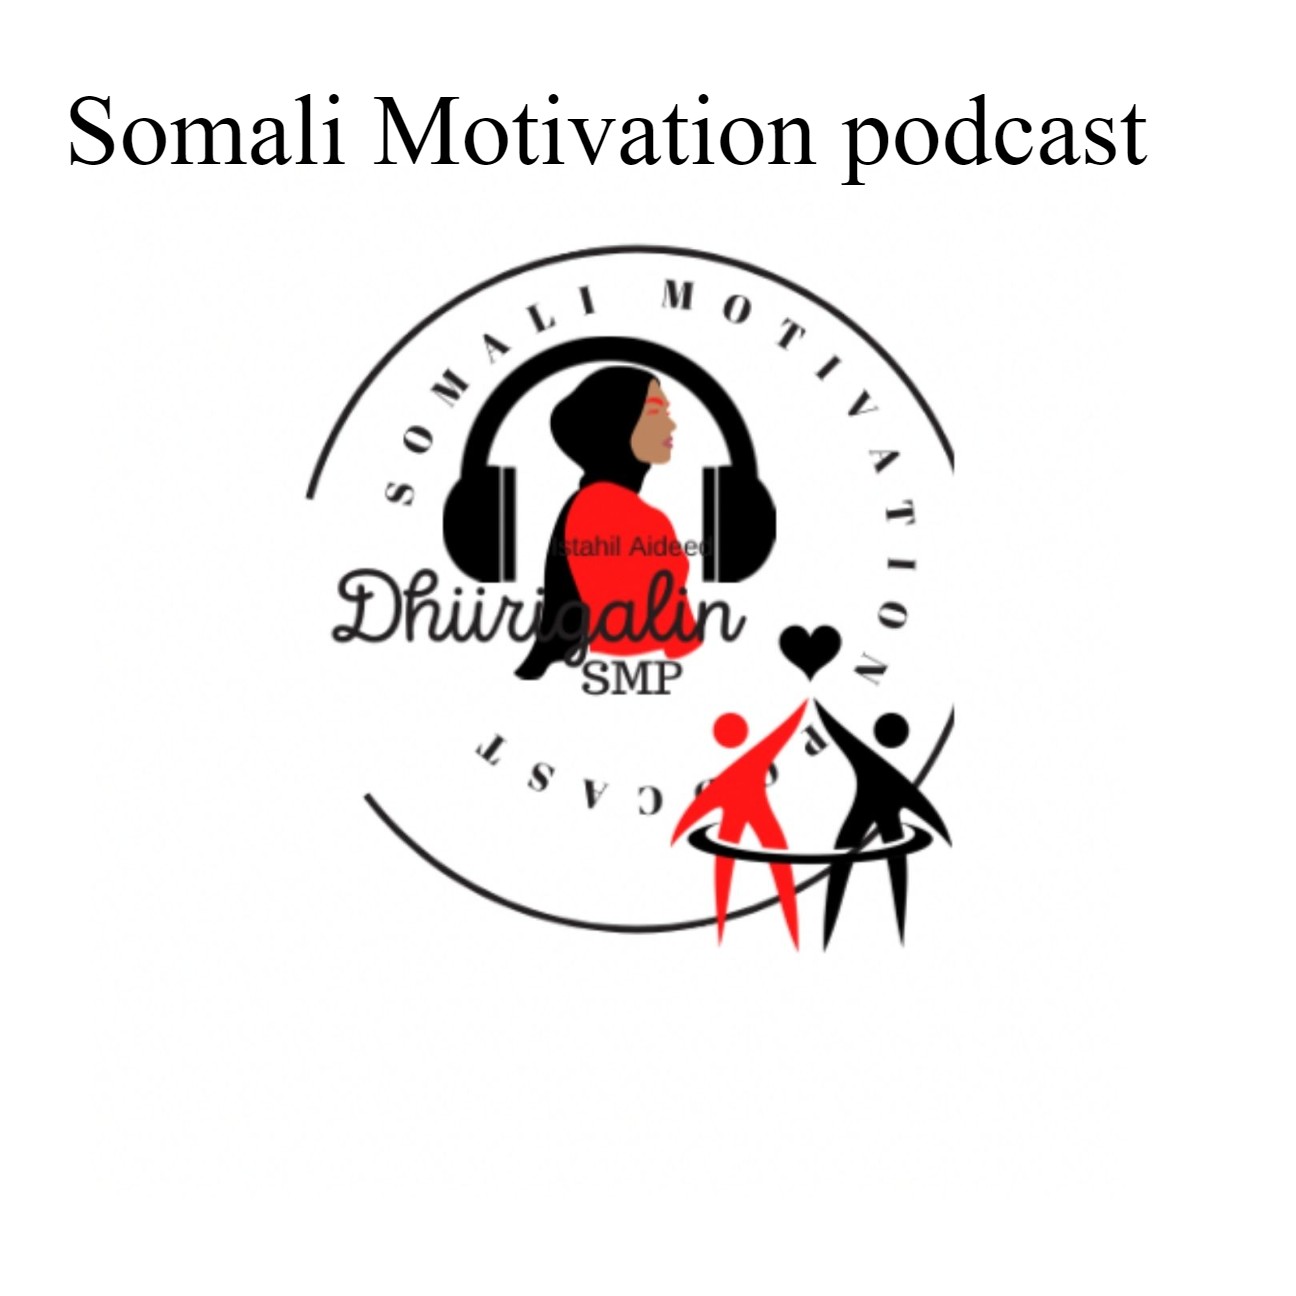 Somali Motivation podcast